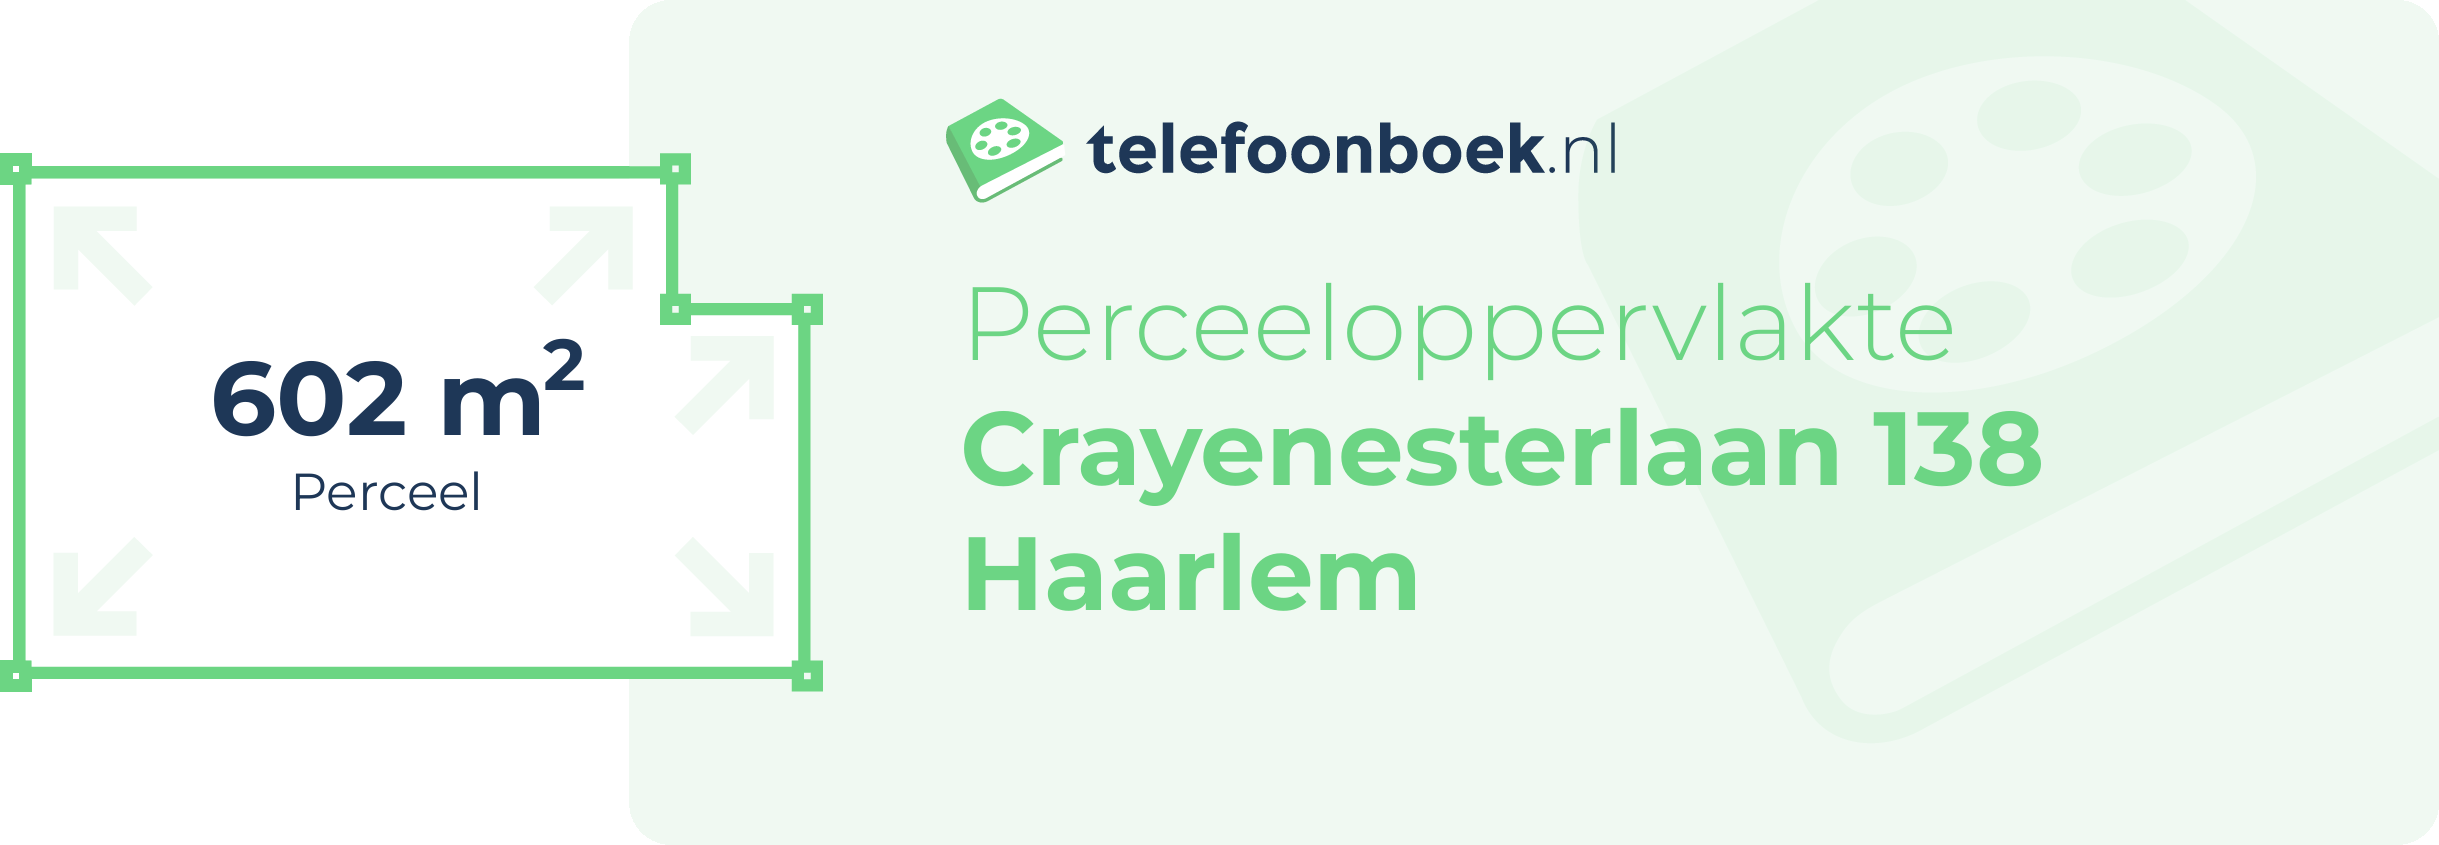 Perceeloppervlakte Crayenesterlaan 138 Haarlem